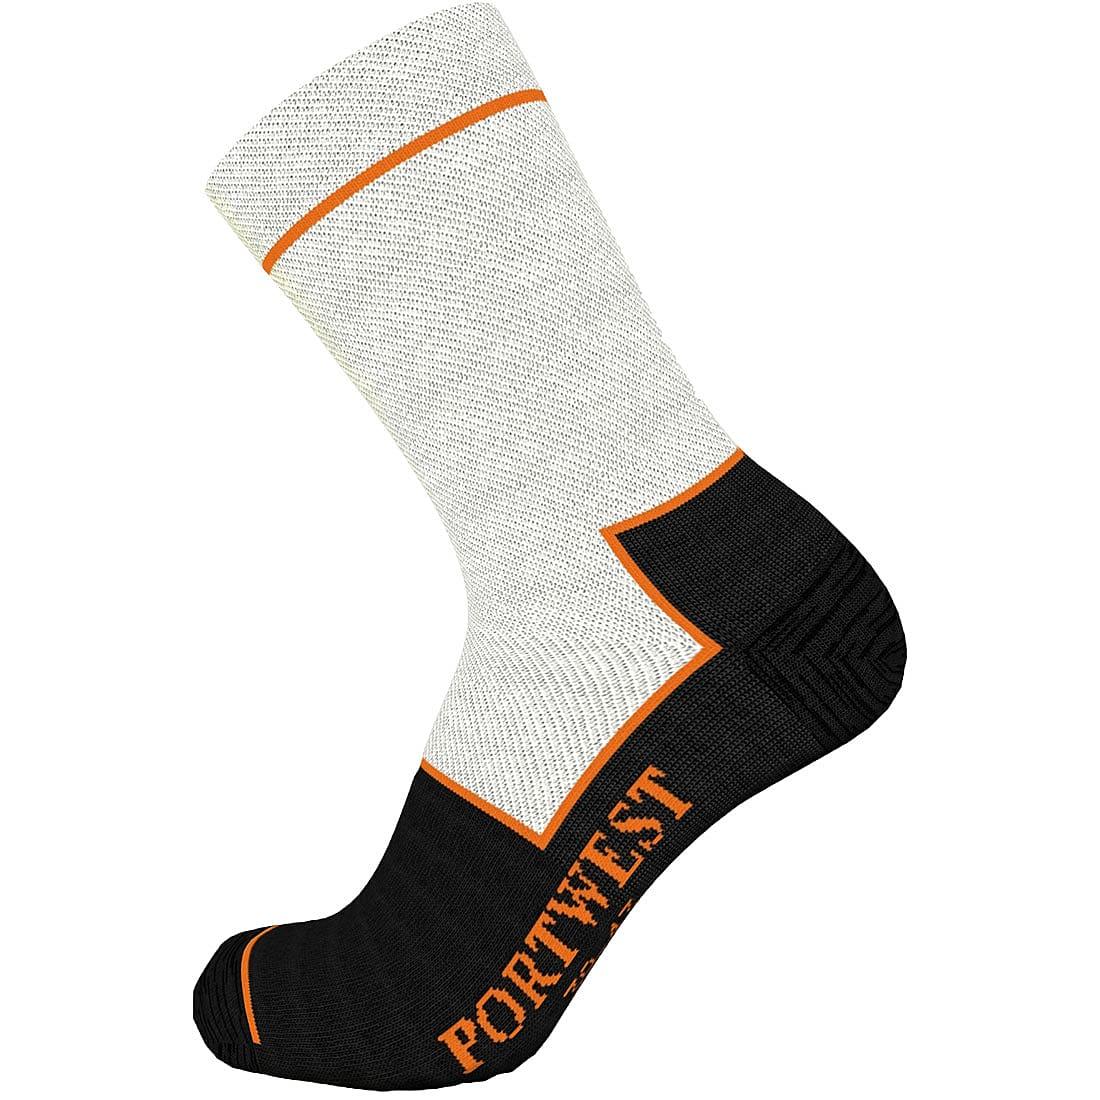 Portwest Cut Resistant Socks in Black (Product Code: SK26)